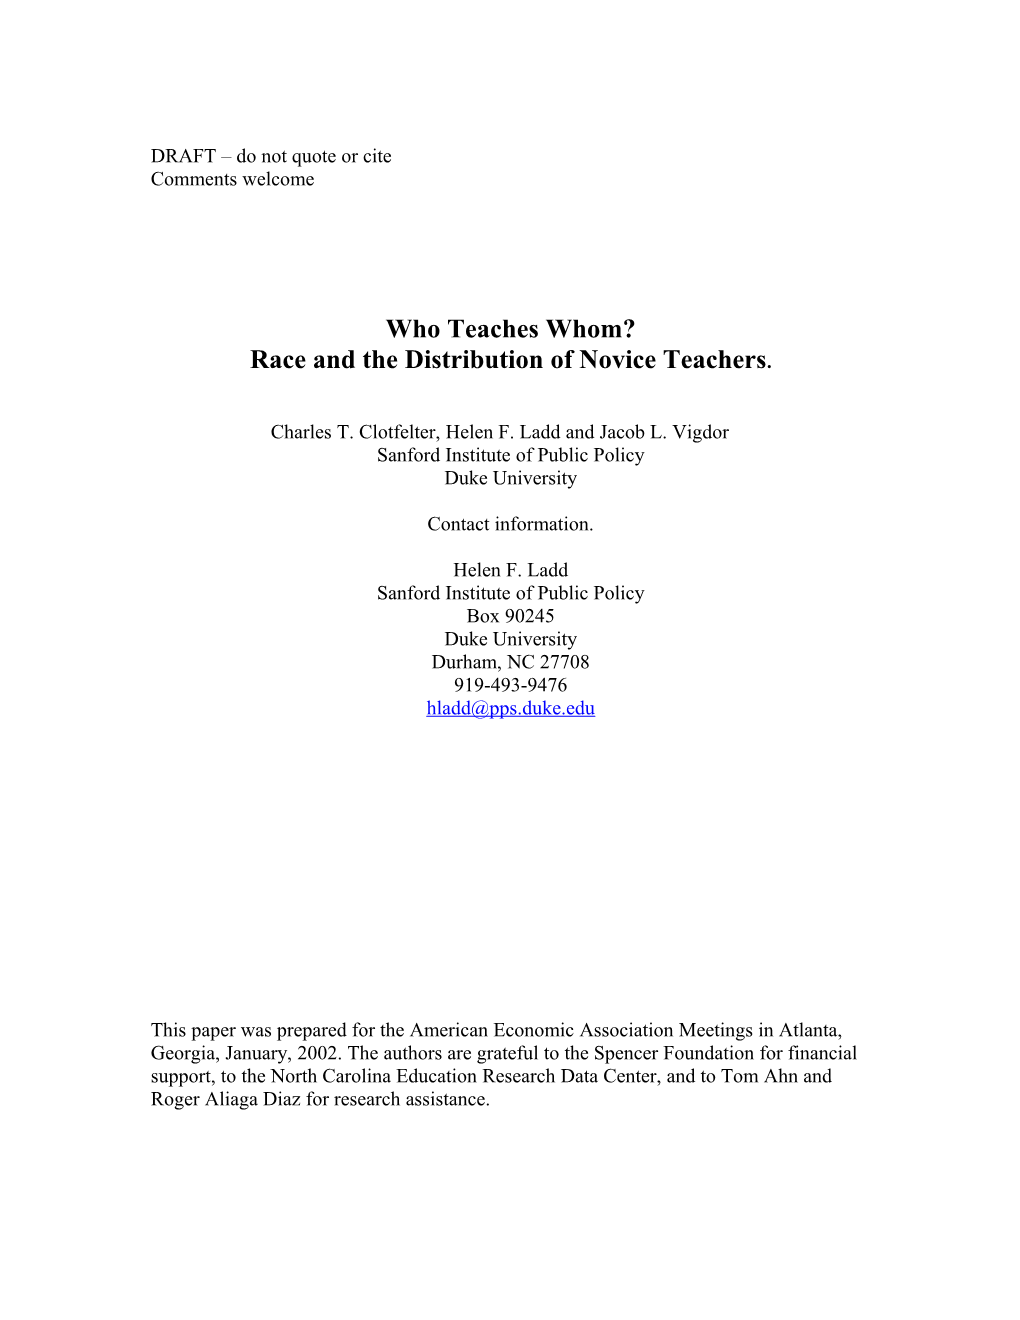 Who Teachers Whom